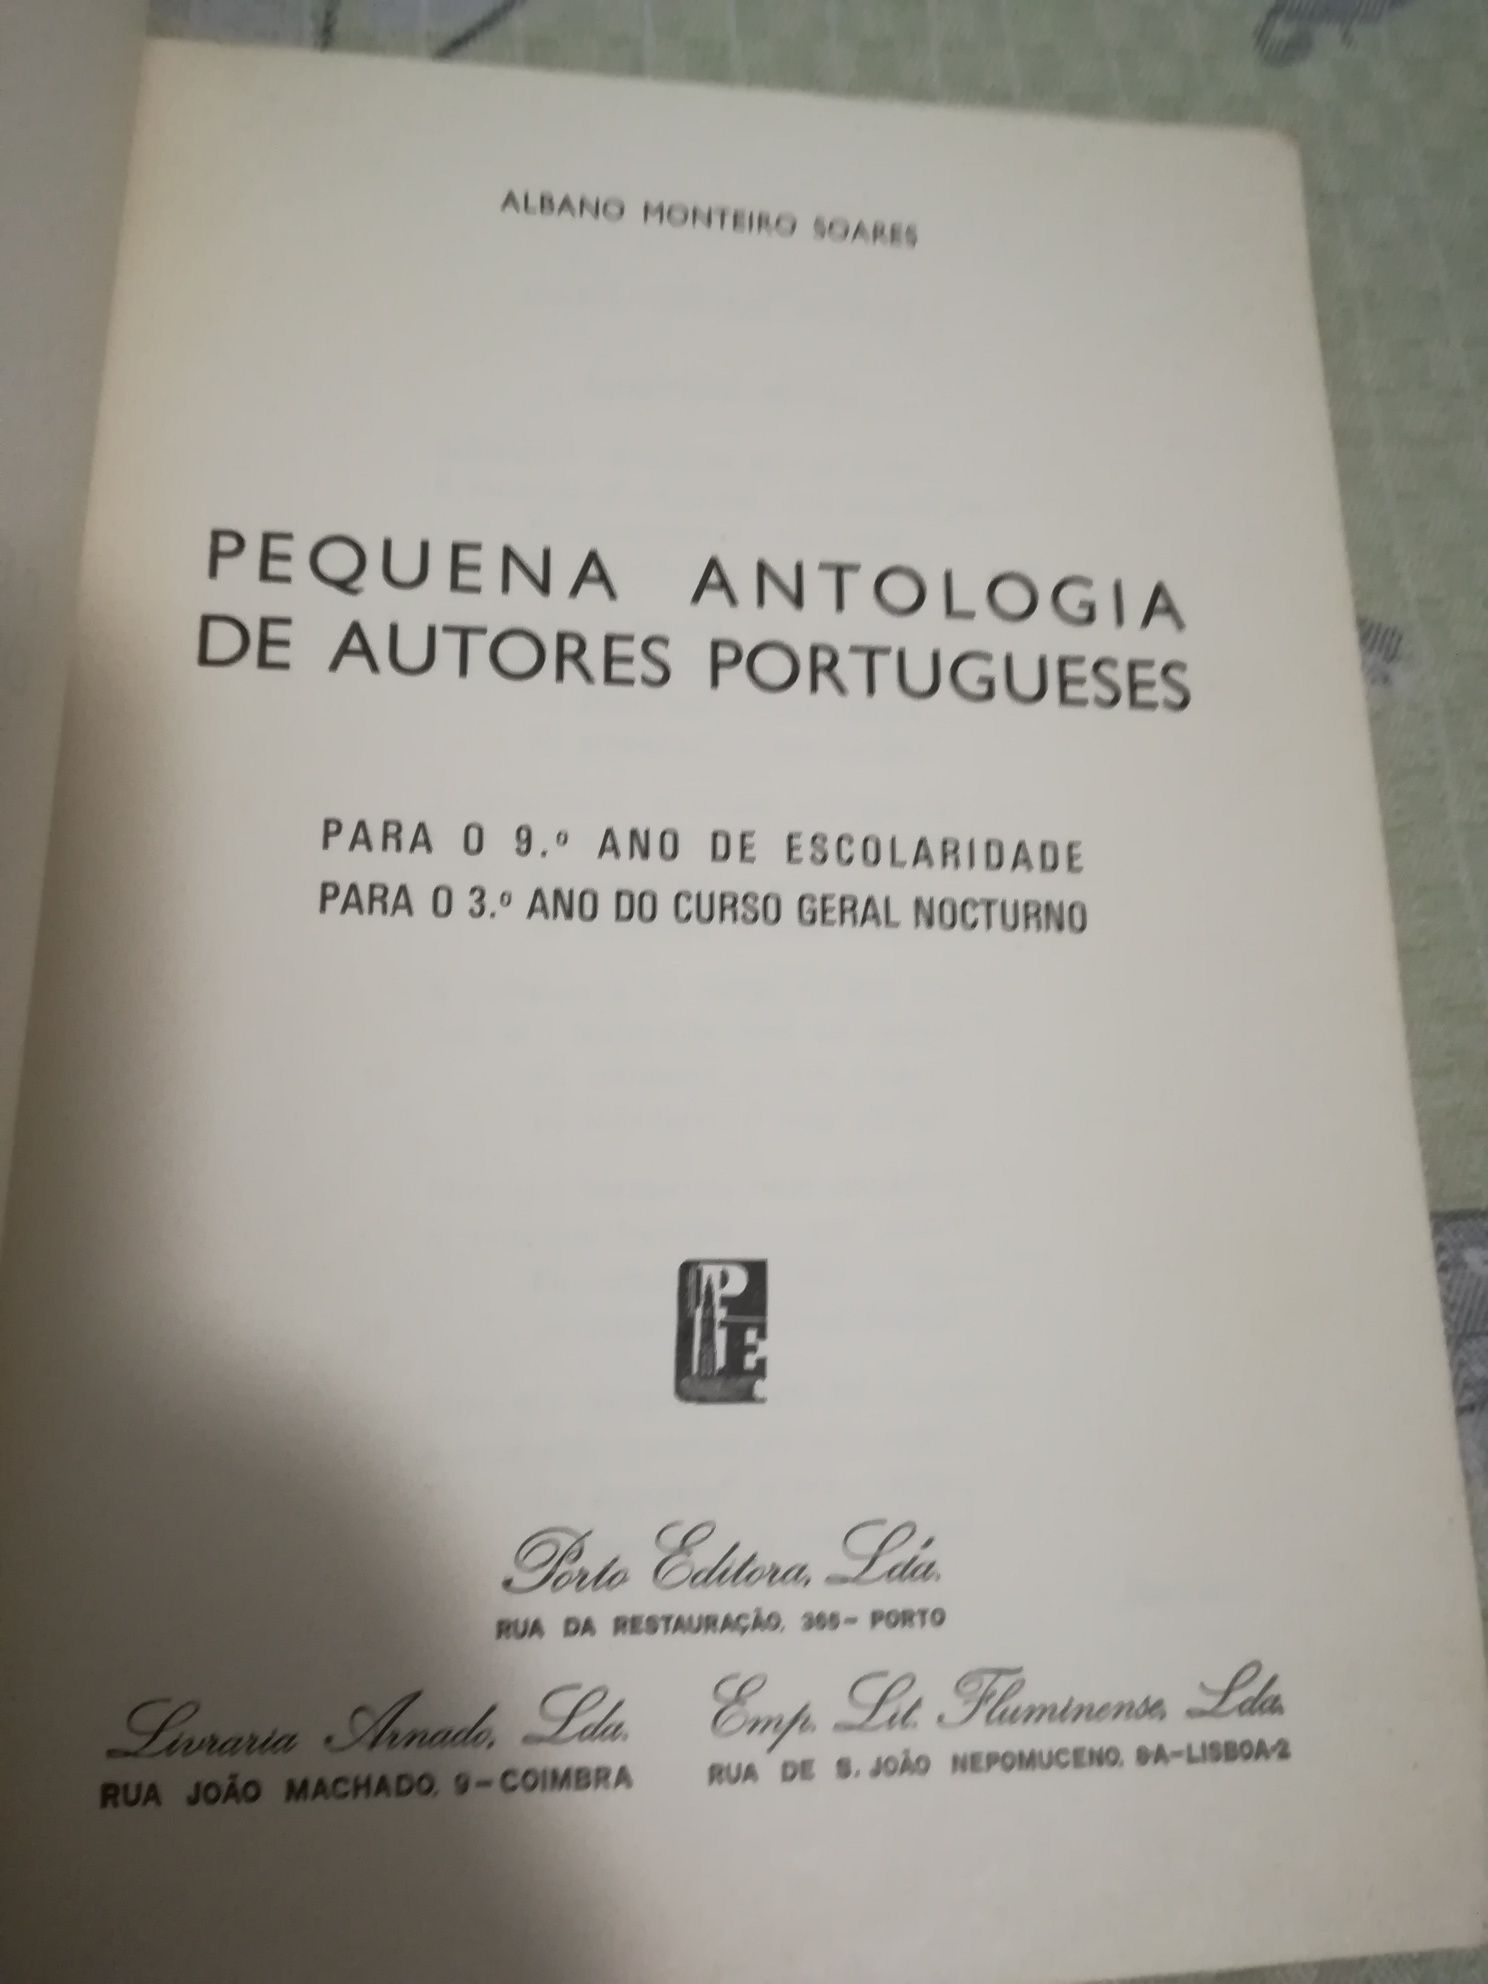 Pequena Antologia de Autores Portugueses (1978)